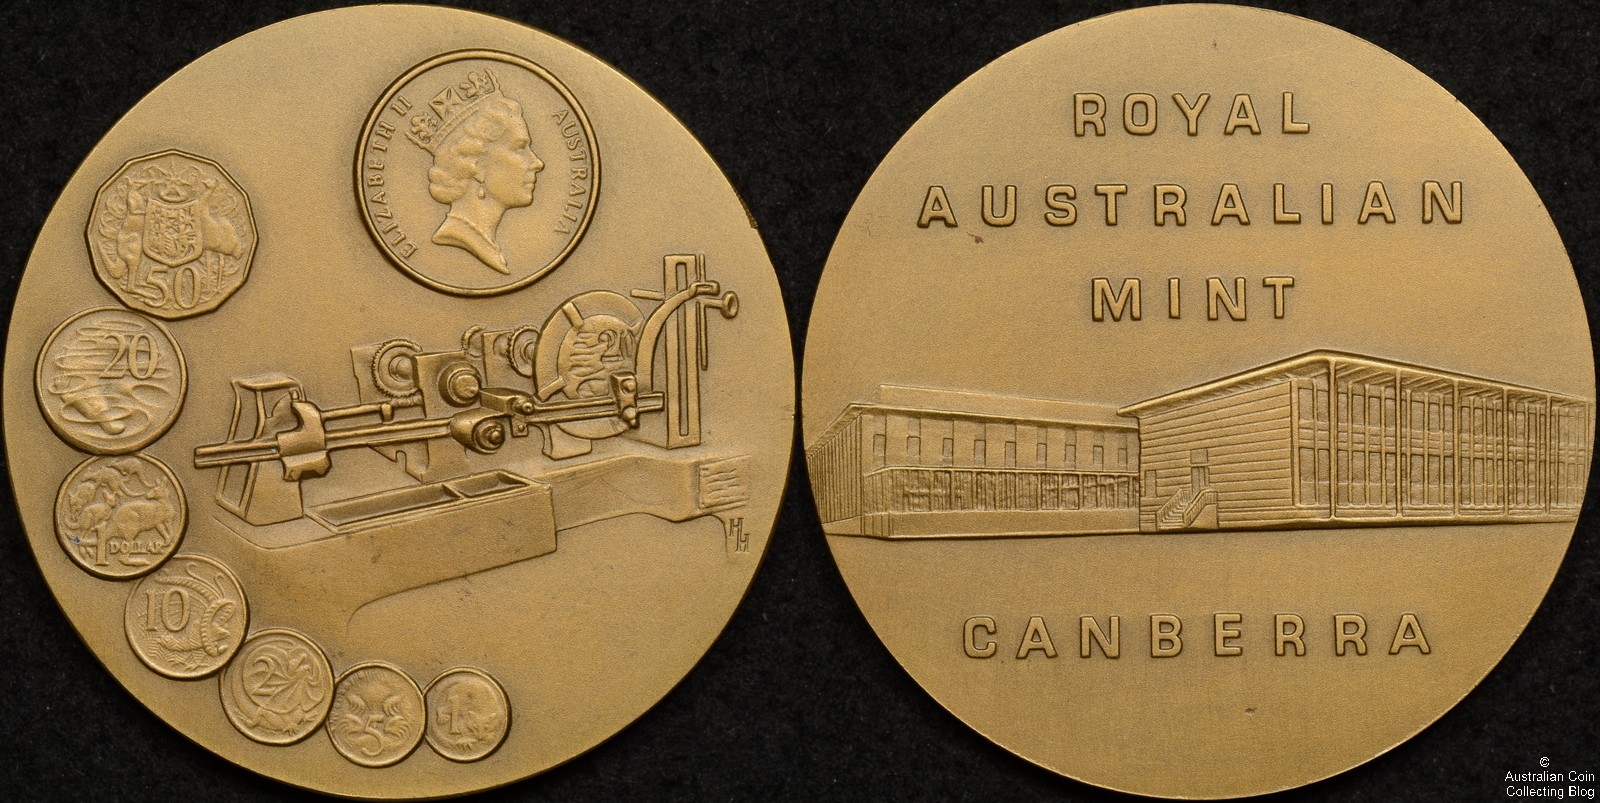 Royal Australian Mint Medal circa 1985-1988